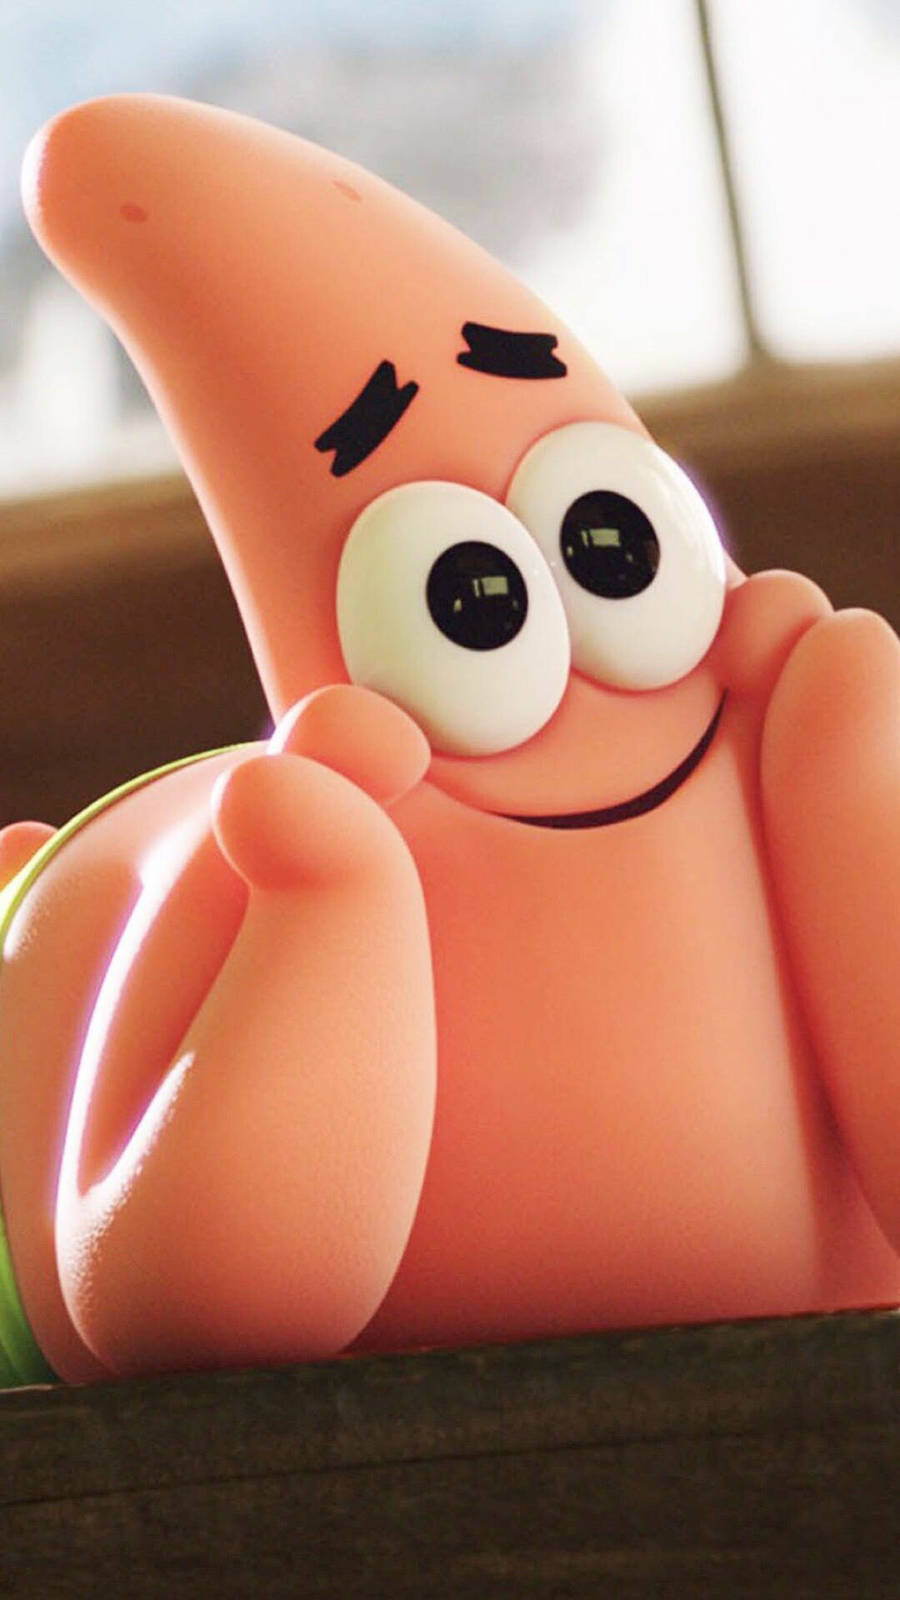 Smiling Patrick Cartoon IPhone Wallpaper